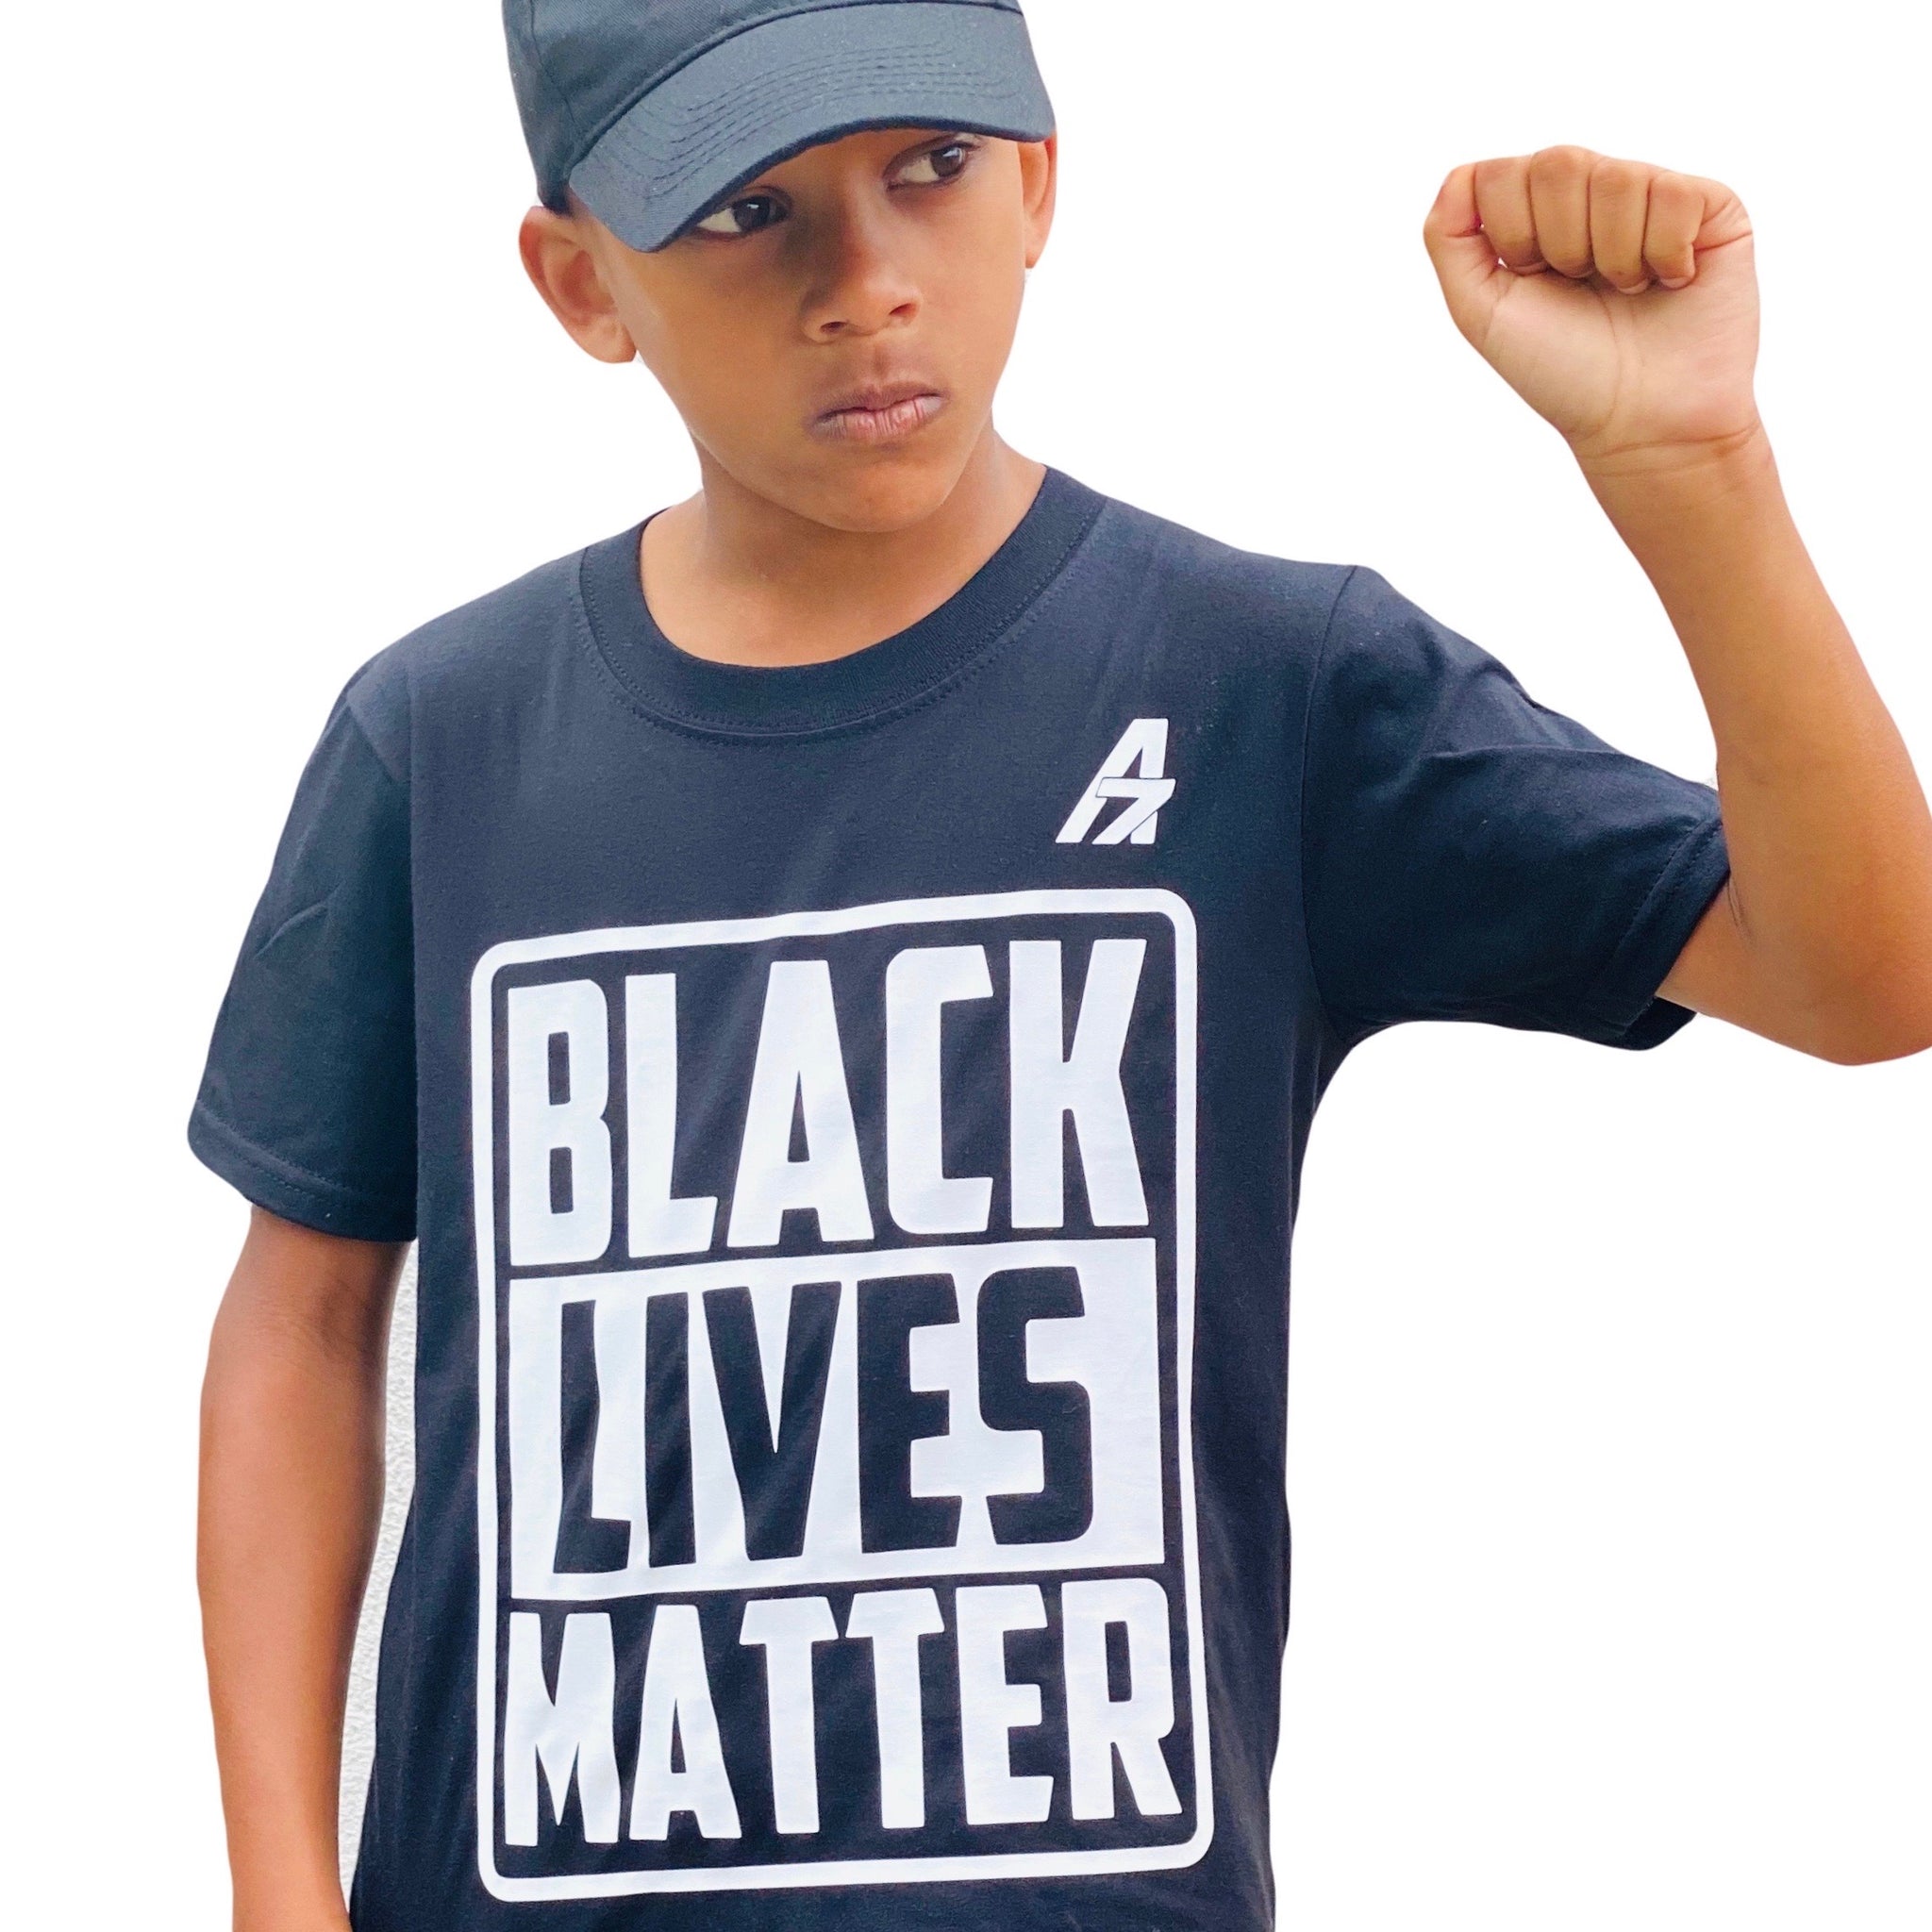 A7 Asher “Black Lives Matter” Children’s Black T-Shirt, White A7 Logo